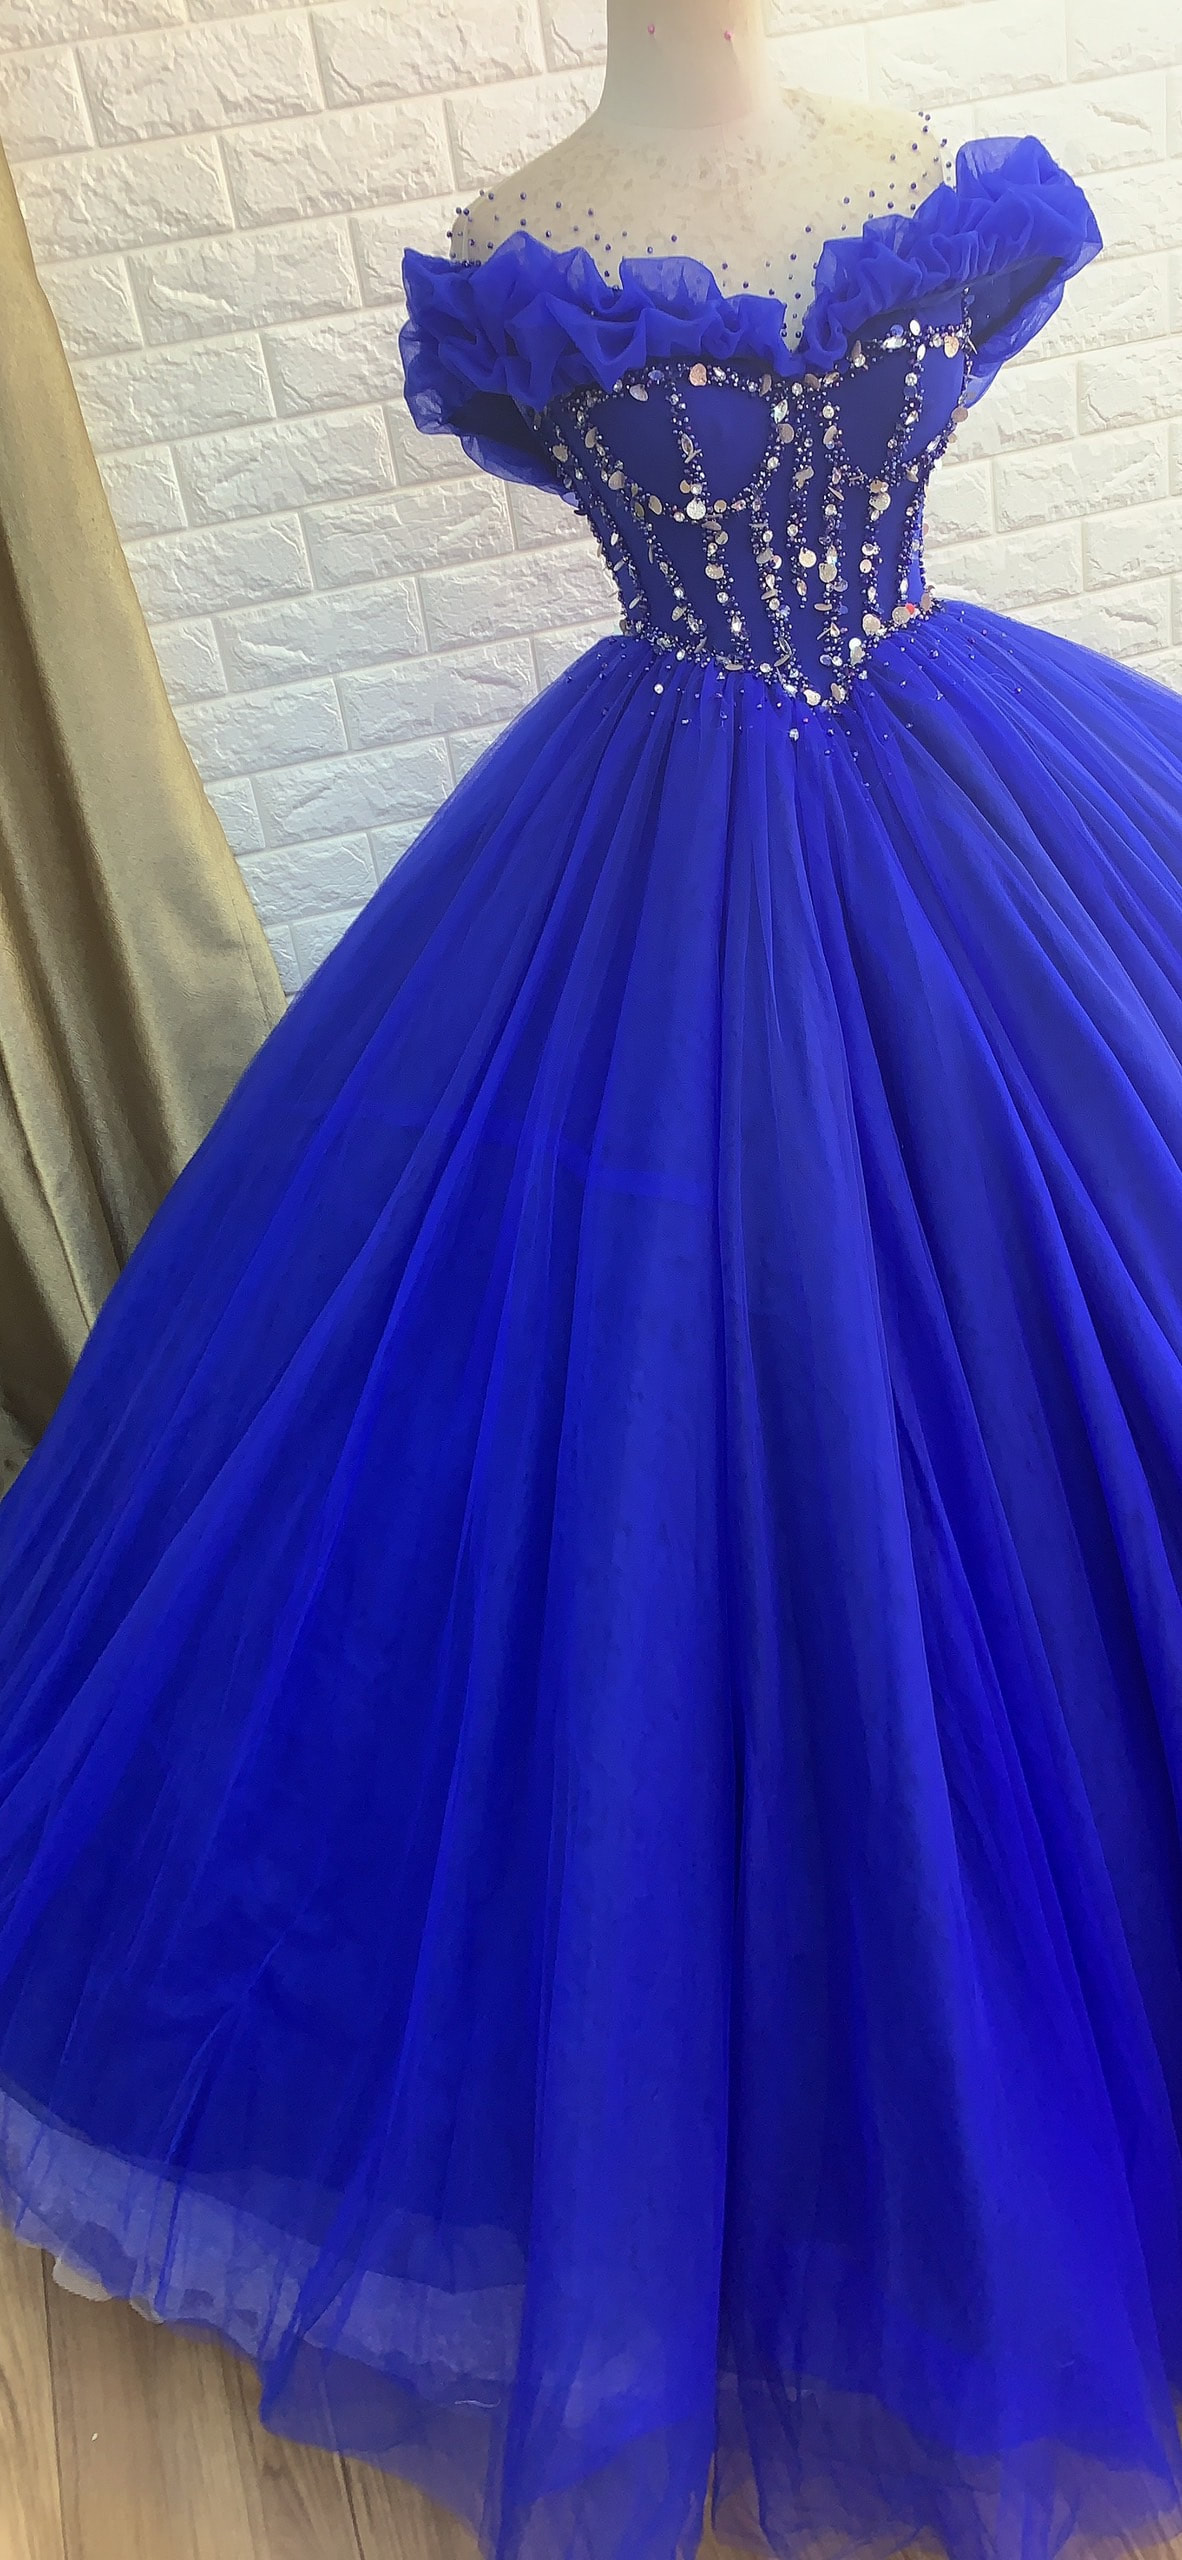 Royal Blue Evening Dresses Dress sleeves woman evening elegant length dresses maxi summer plus winter spring autumn belt